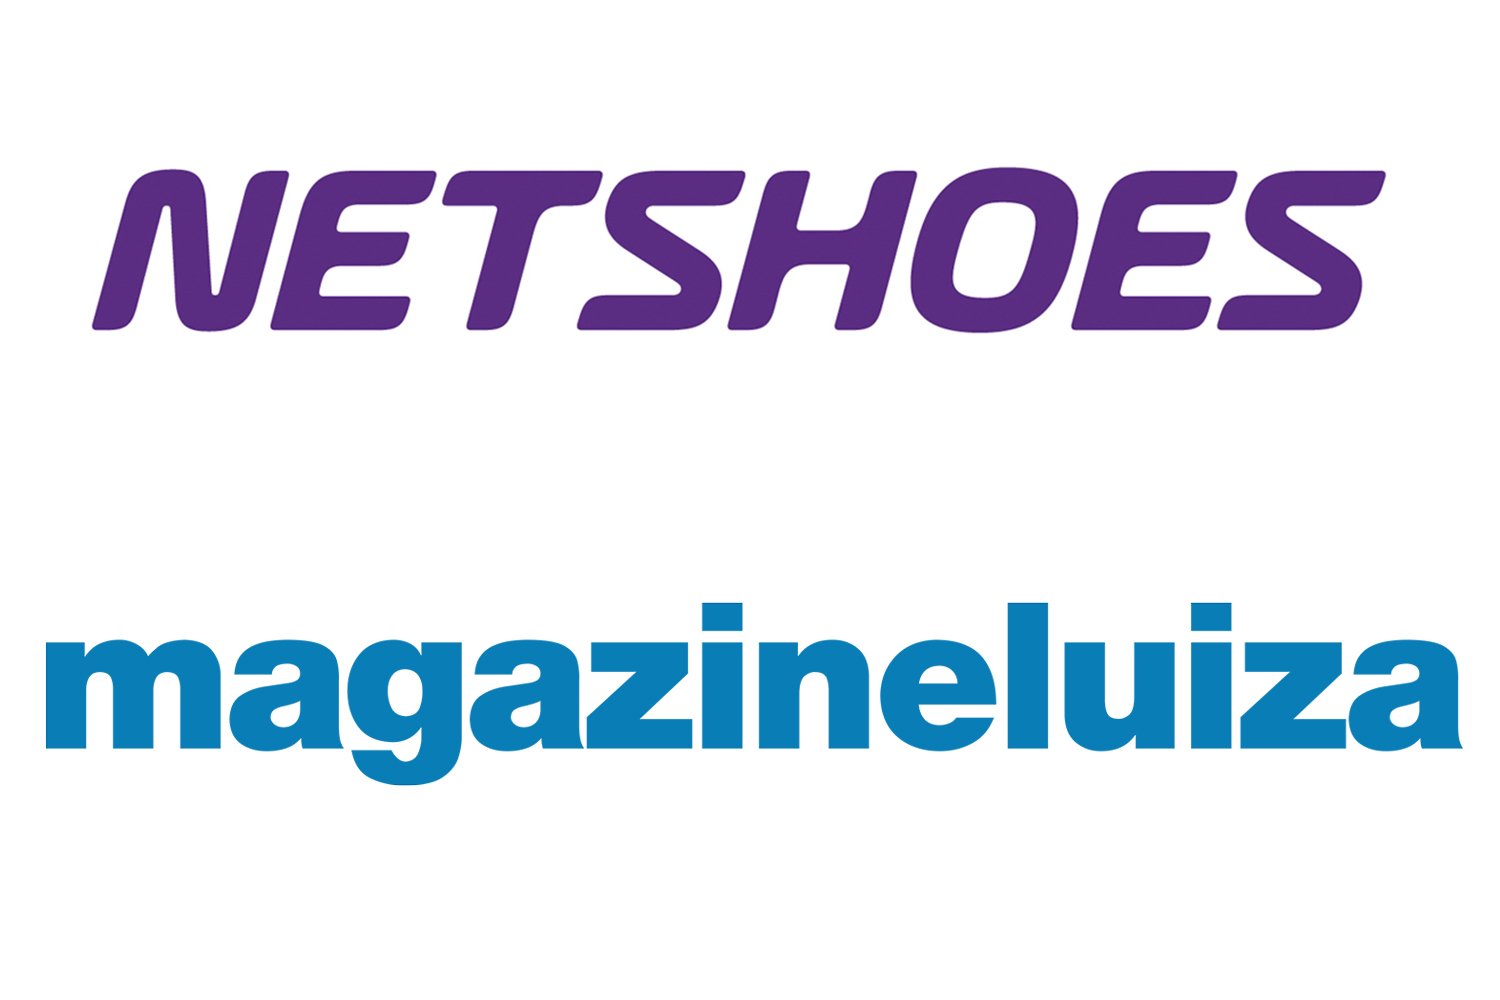 venda da netshoes para magazine luiza